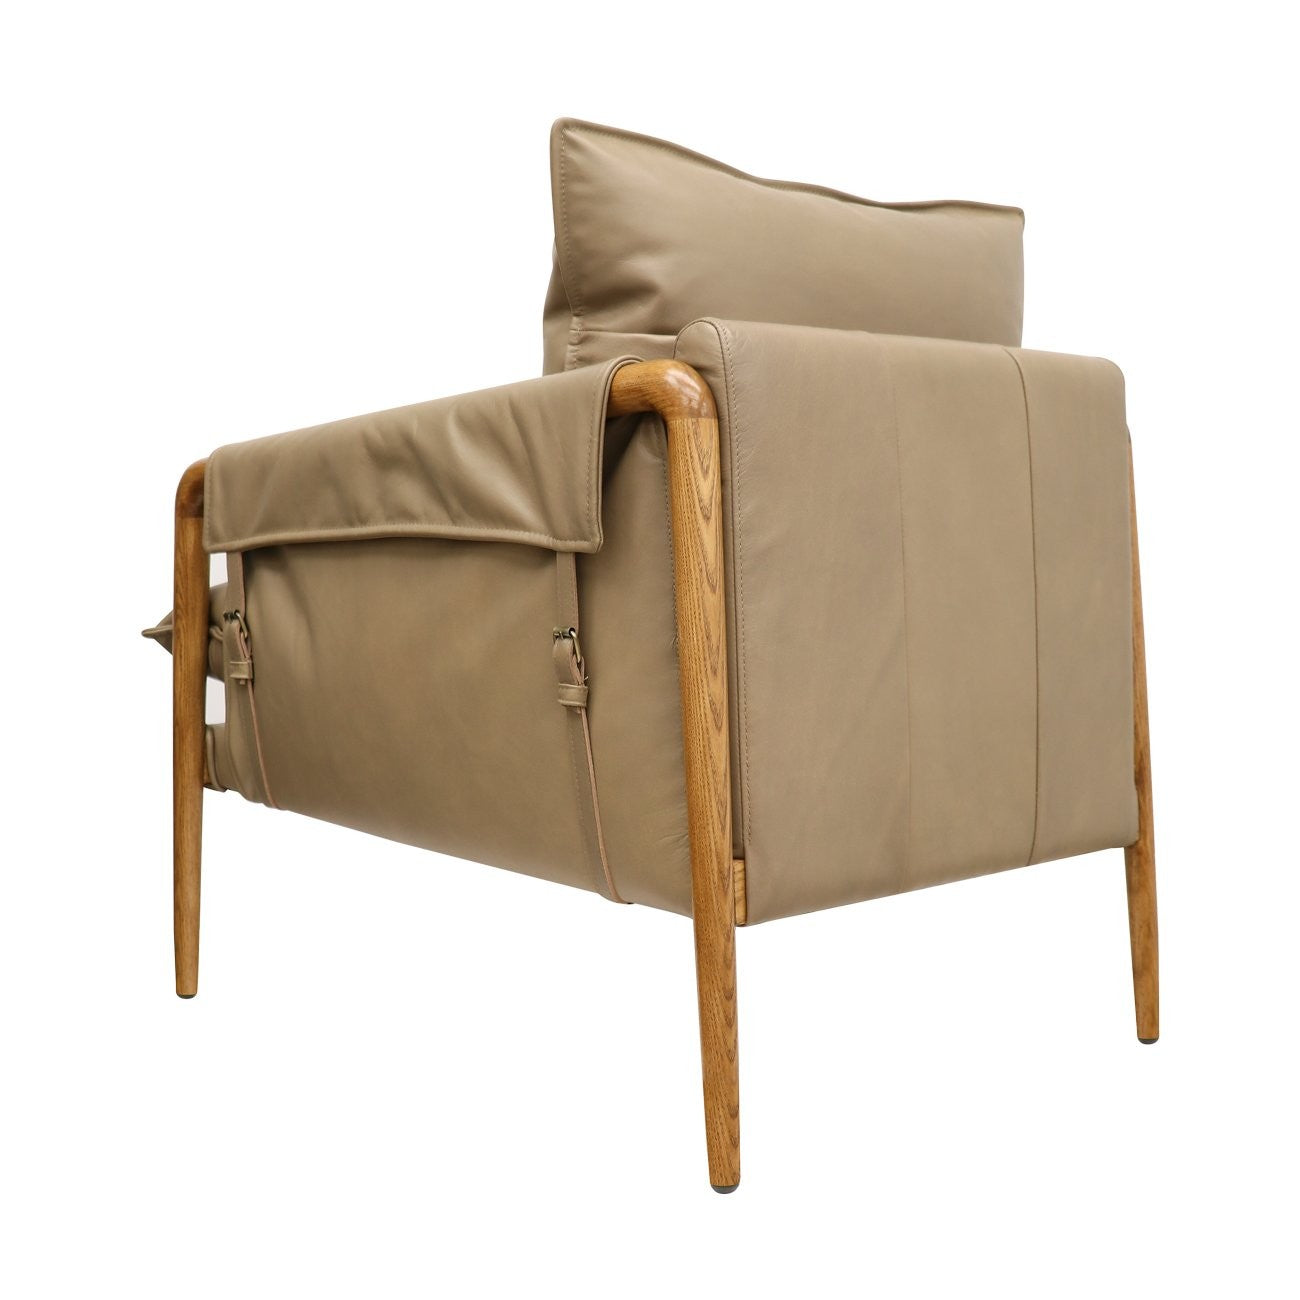 Conan Leather Armchair - Beige